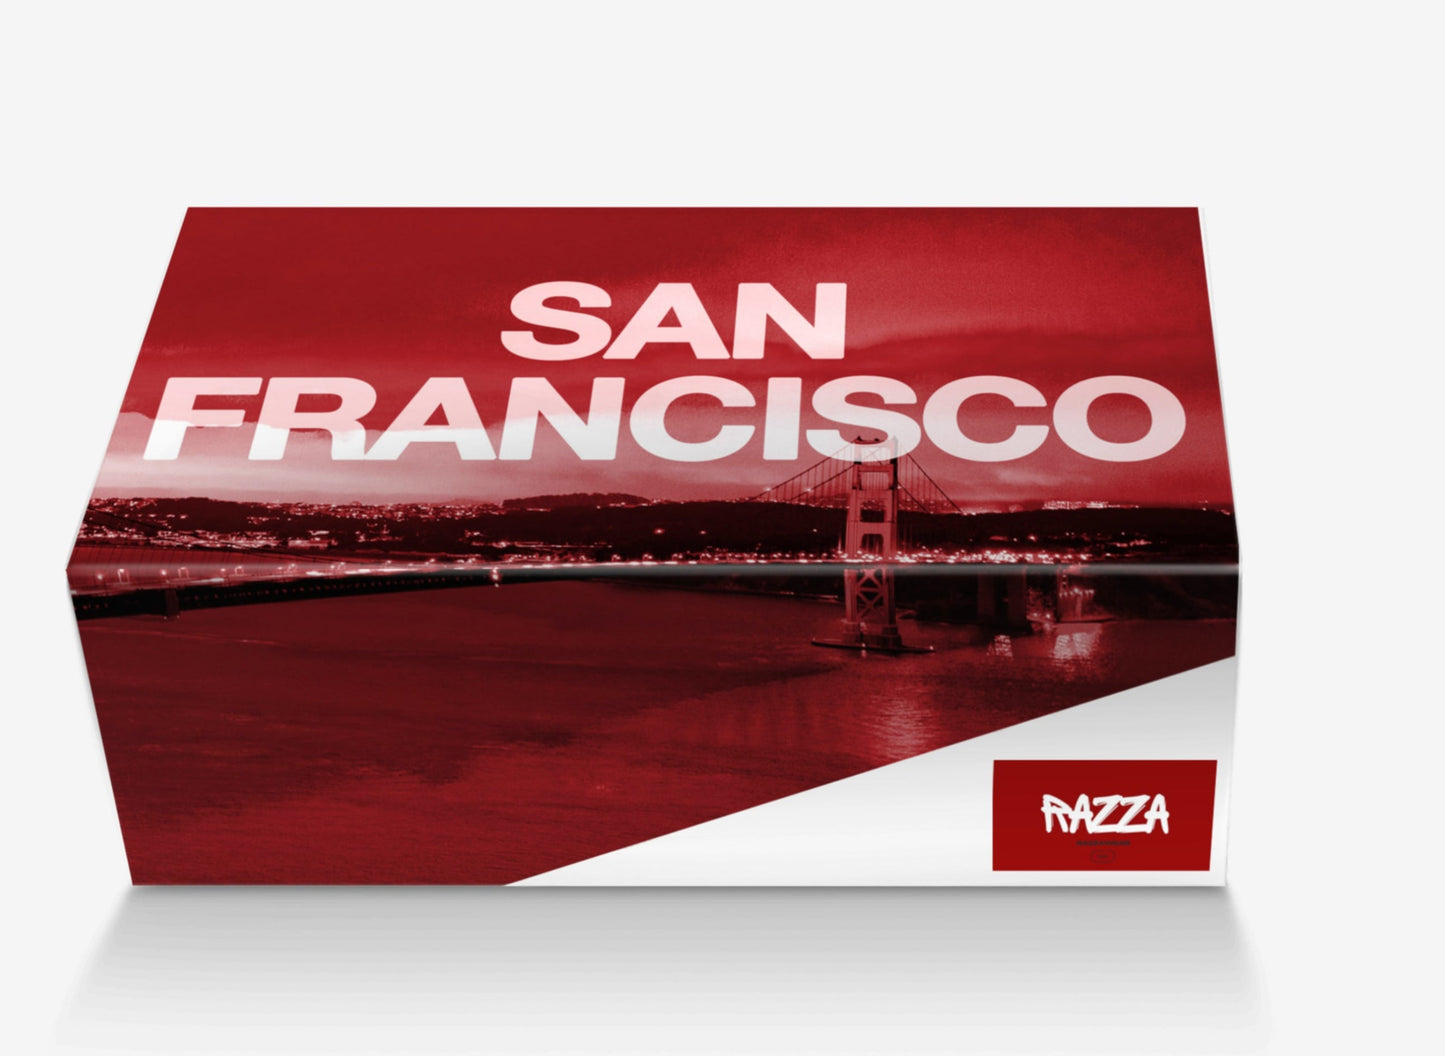 Razza Runner San Francisco